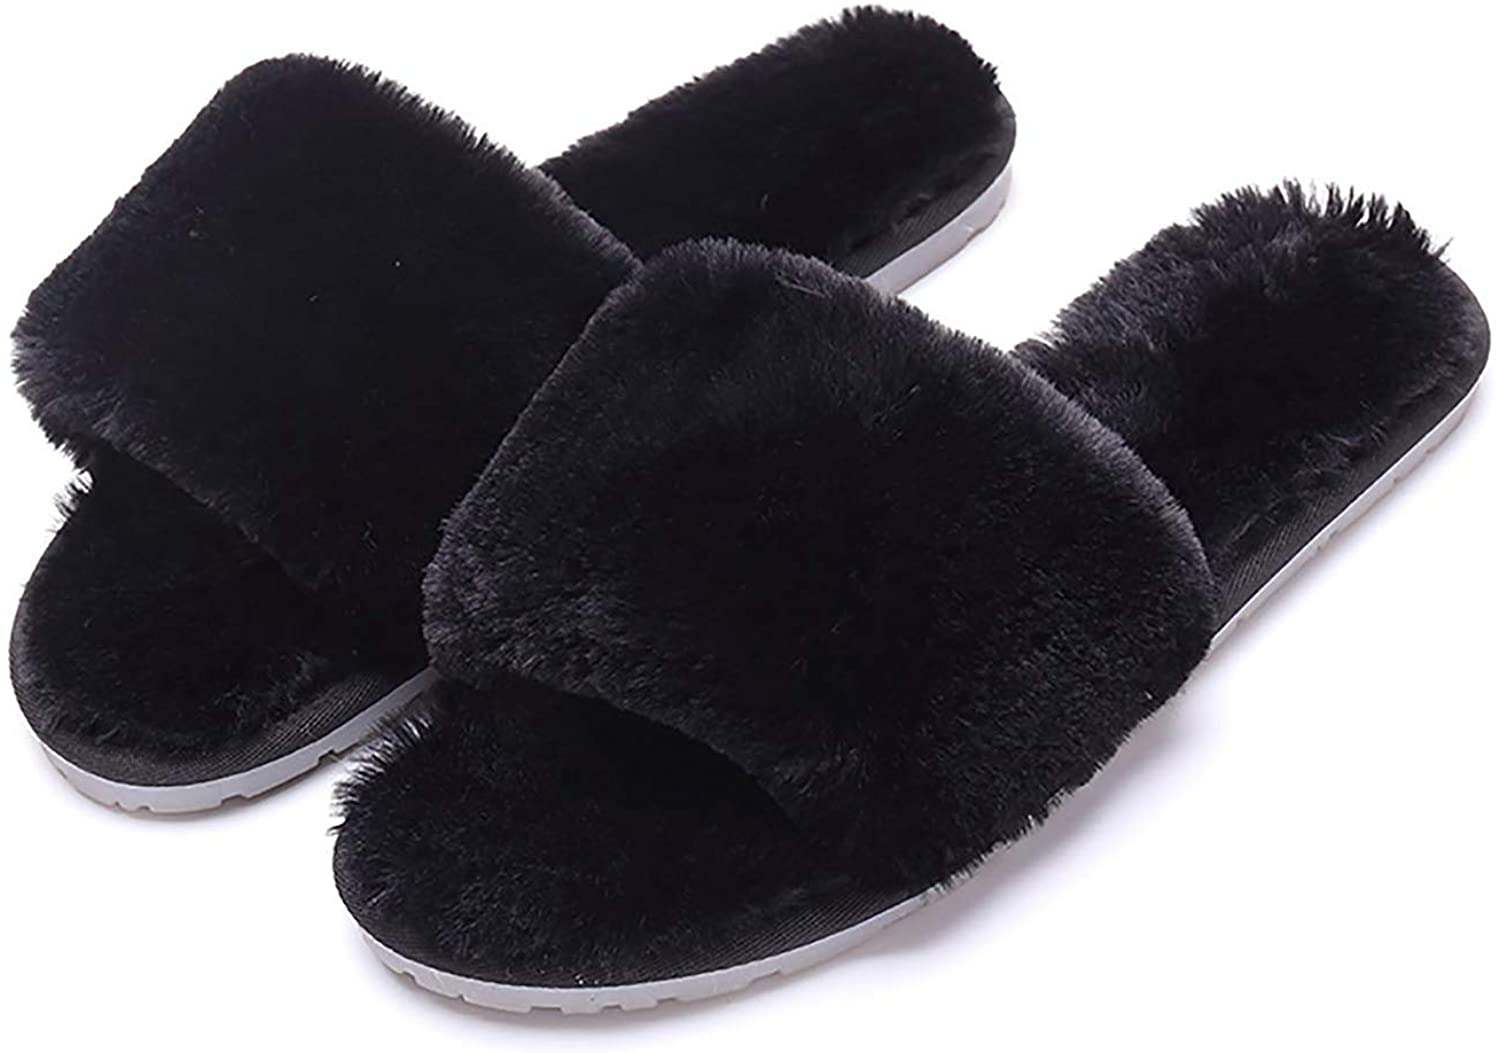 12 Wholesale Women's Fluffy Faux Fur Slippers Comfy Open Toe Two